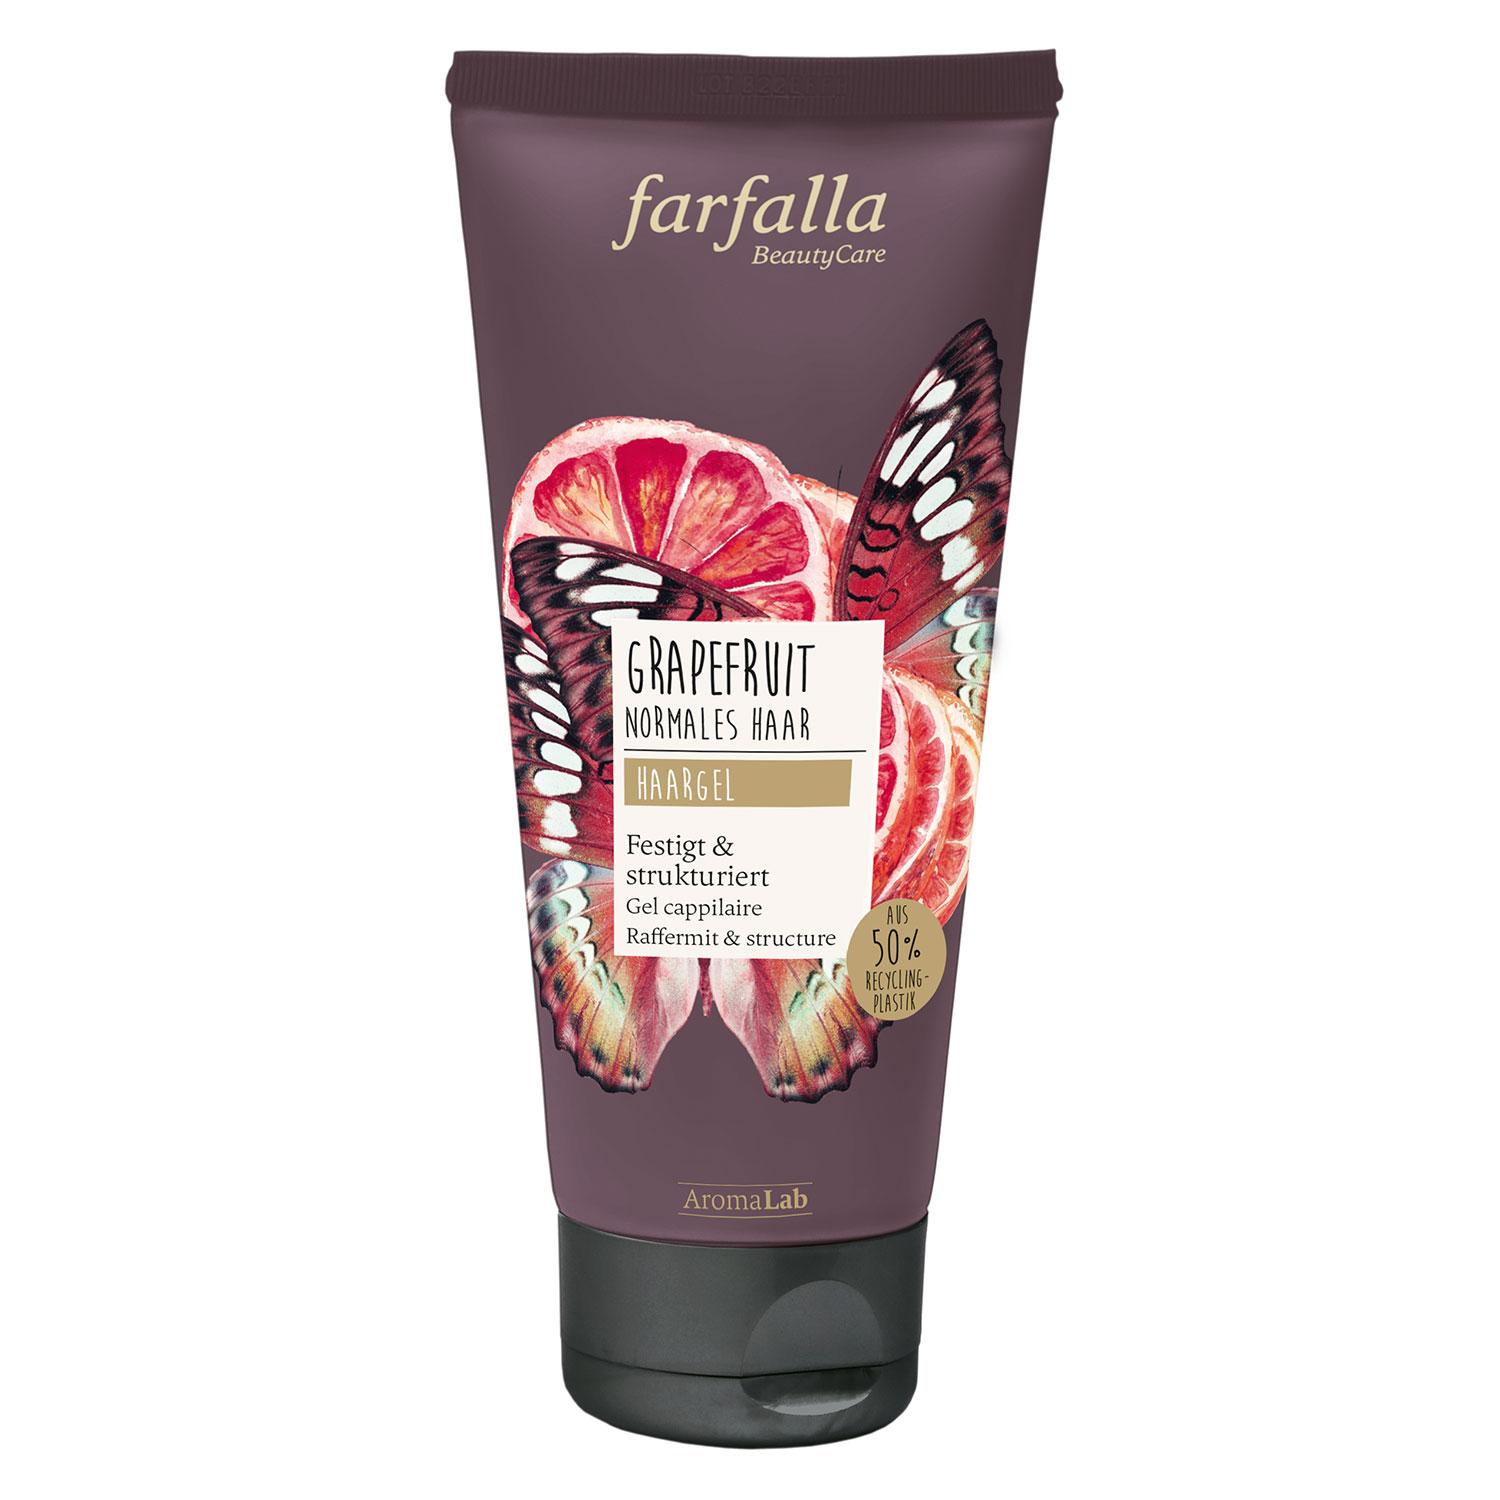 Farfalla Hair Styling - Grapefruit hair gel